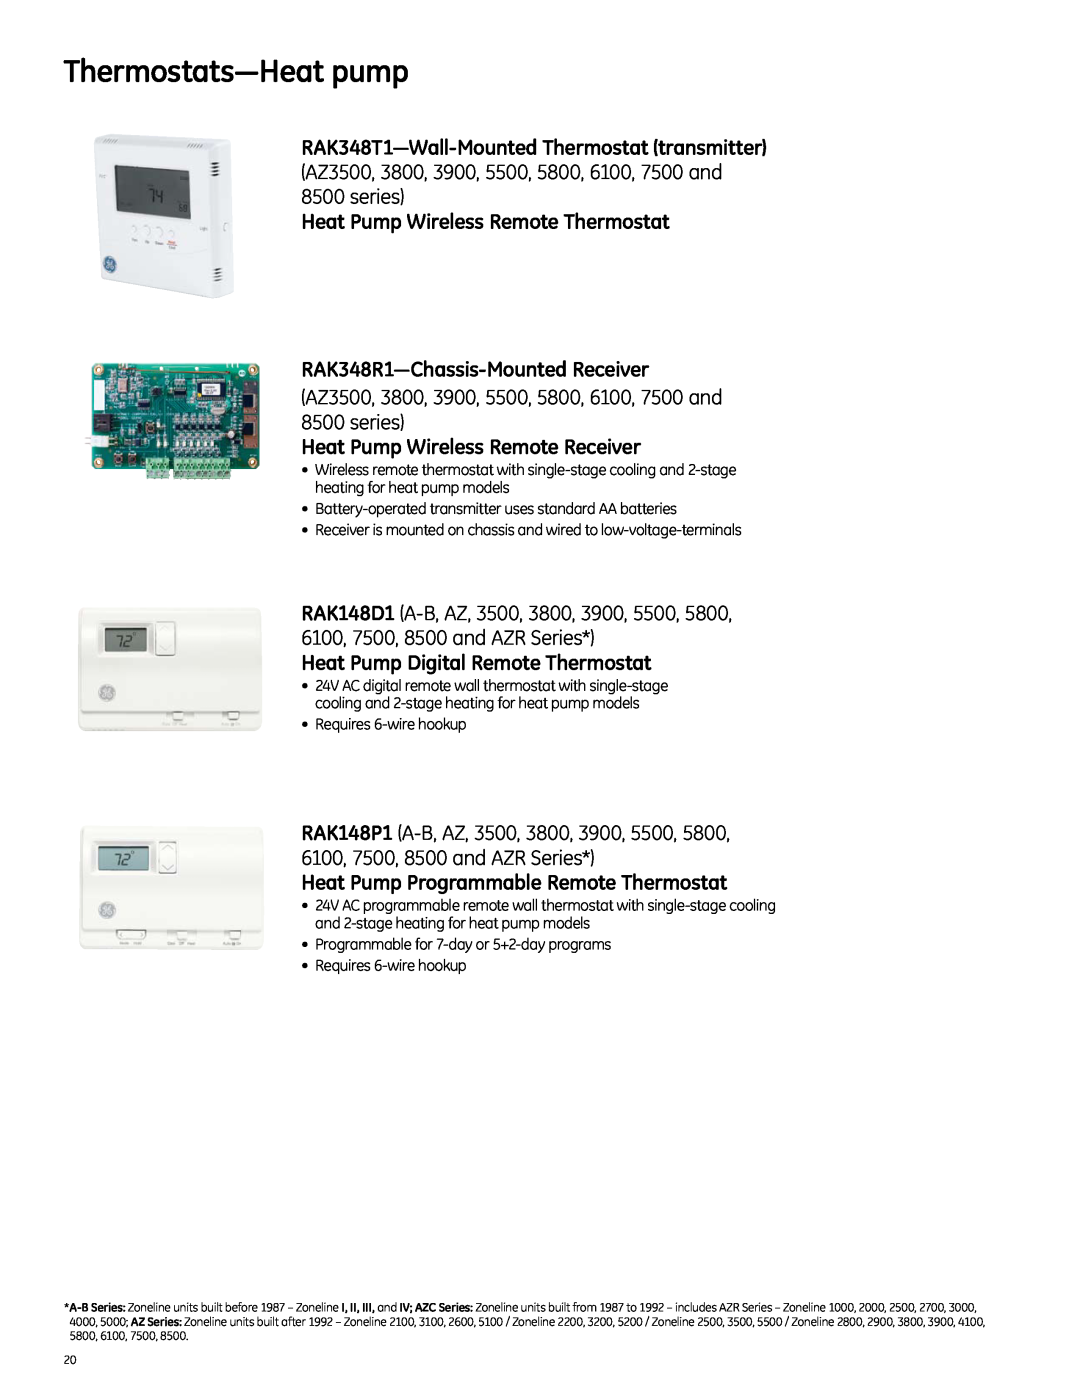 GE 2010 manual Thermostats-Heatpump, Heat Pump Wireless Remote Thermostat, RAK348R1-Chassis-MountedReceiver 